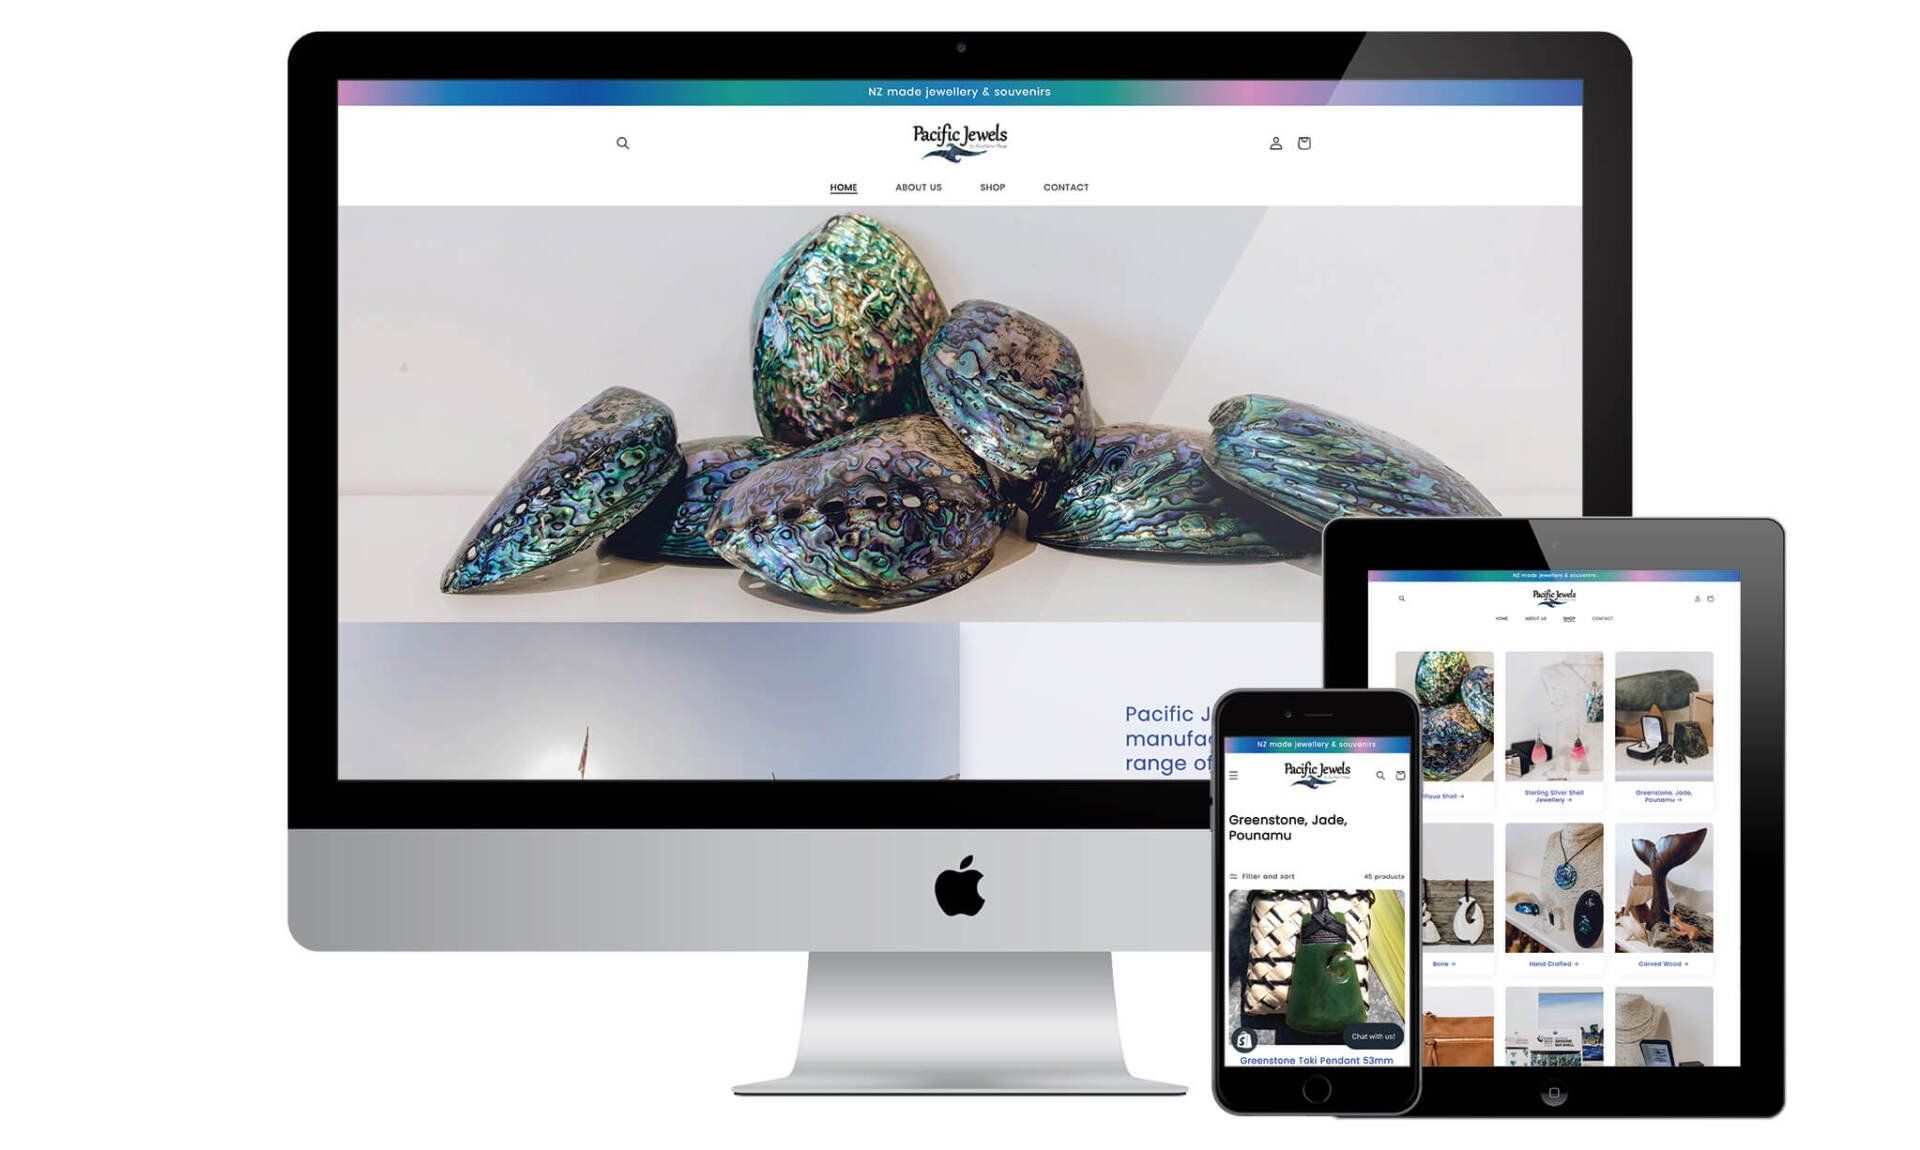 Southern Paua website designed by Vanilla Hayes creative graphic design  studio in Blenheim, Marlborough, New Zealand